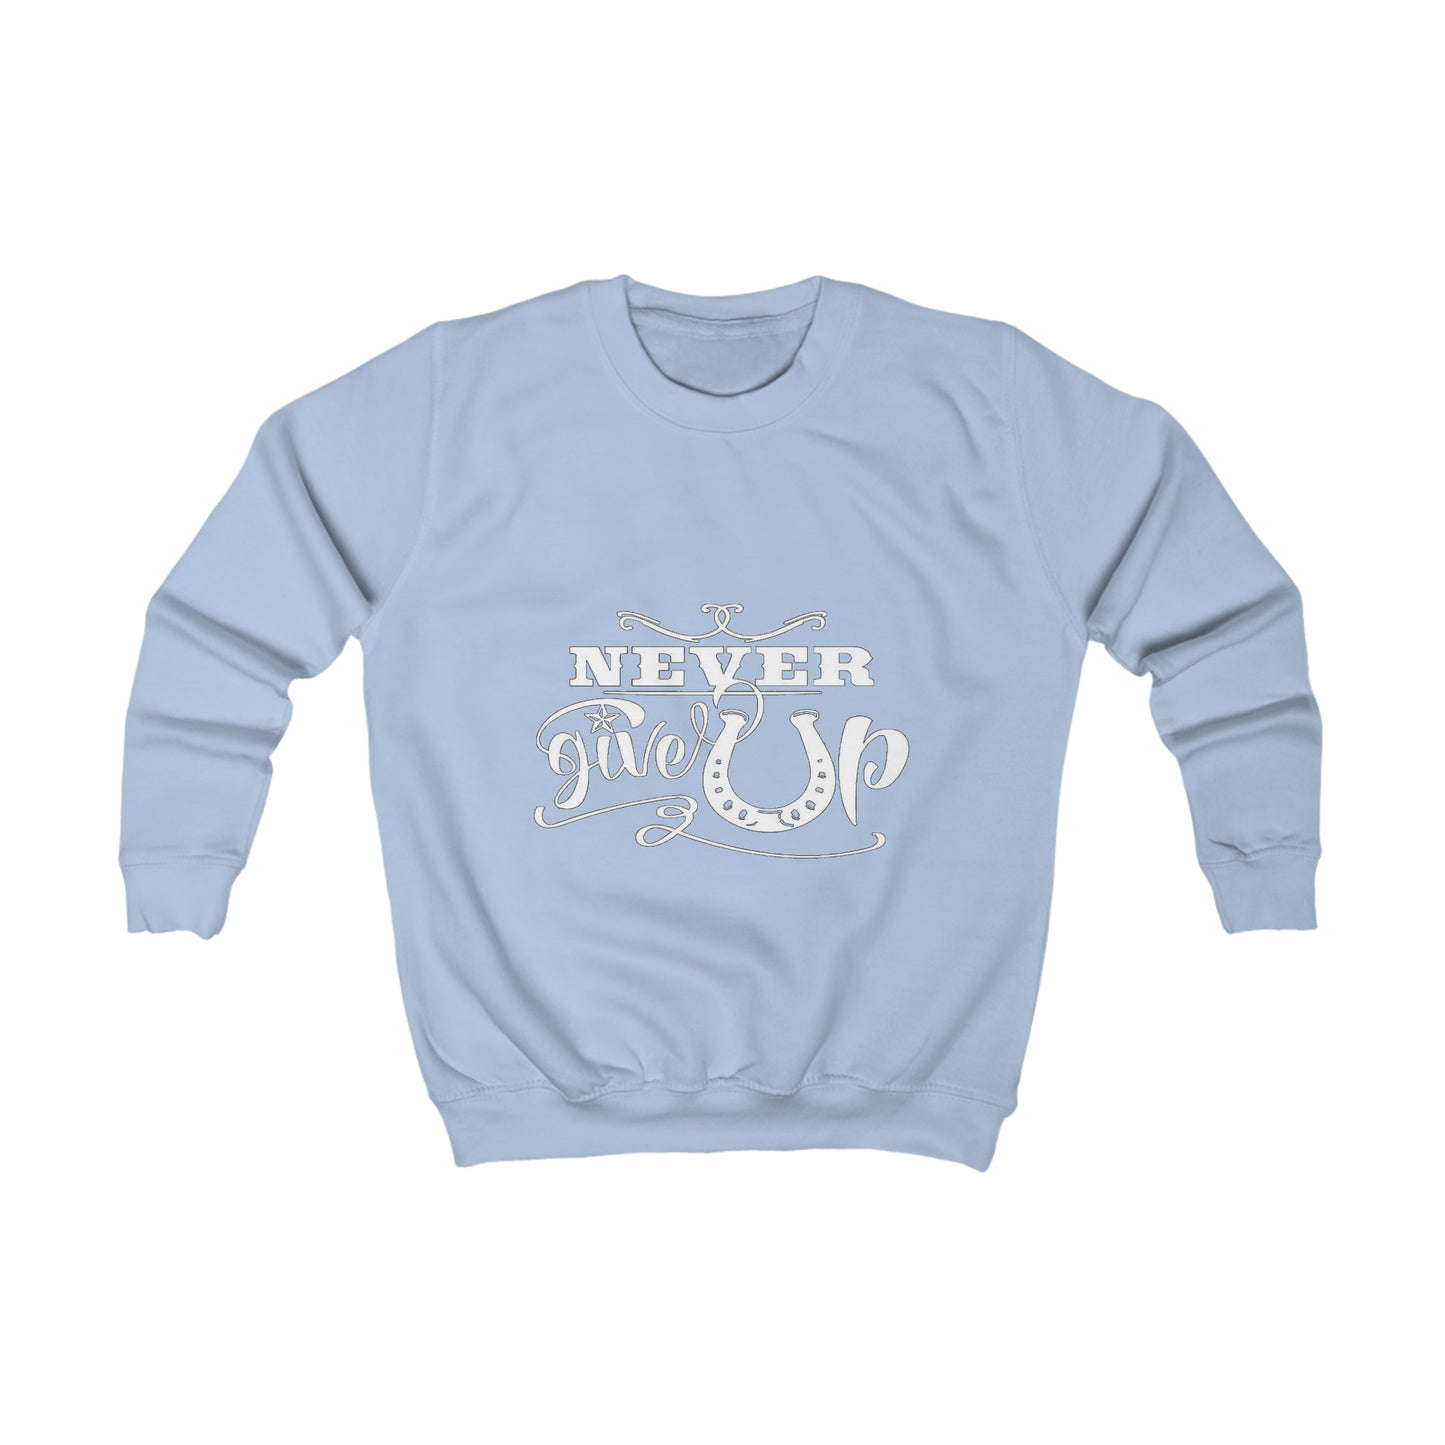 Never Give Up - Kids Sweatshirt